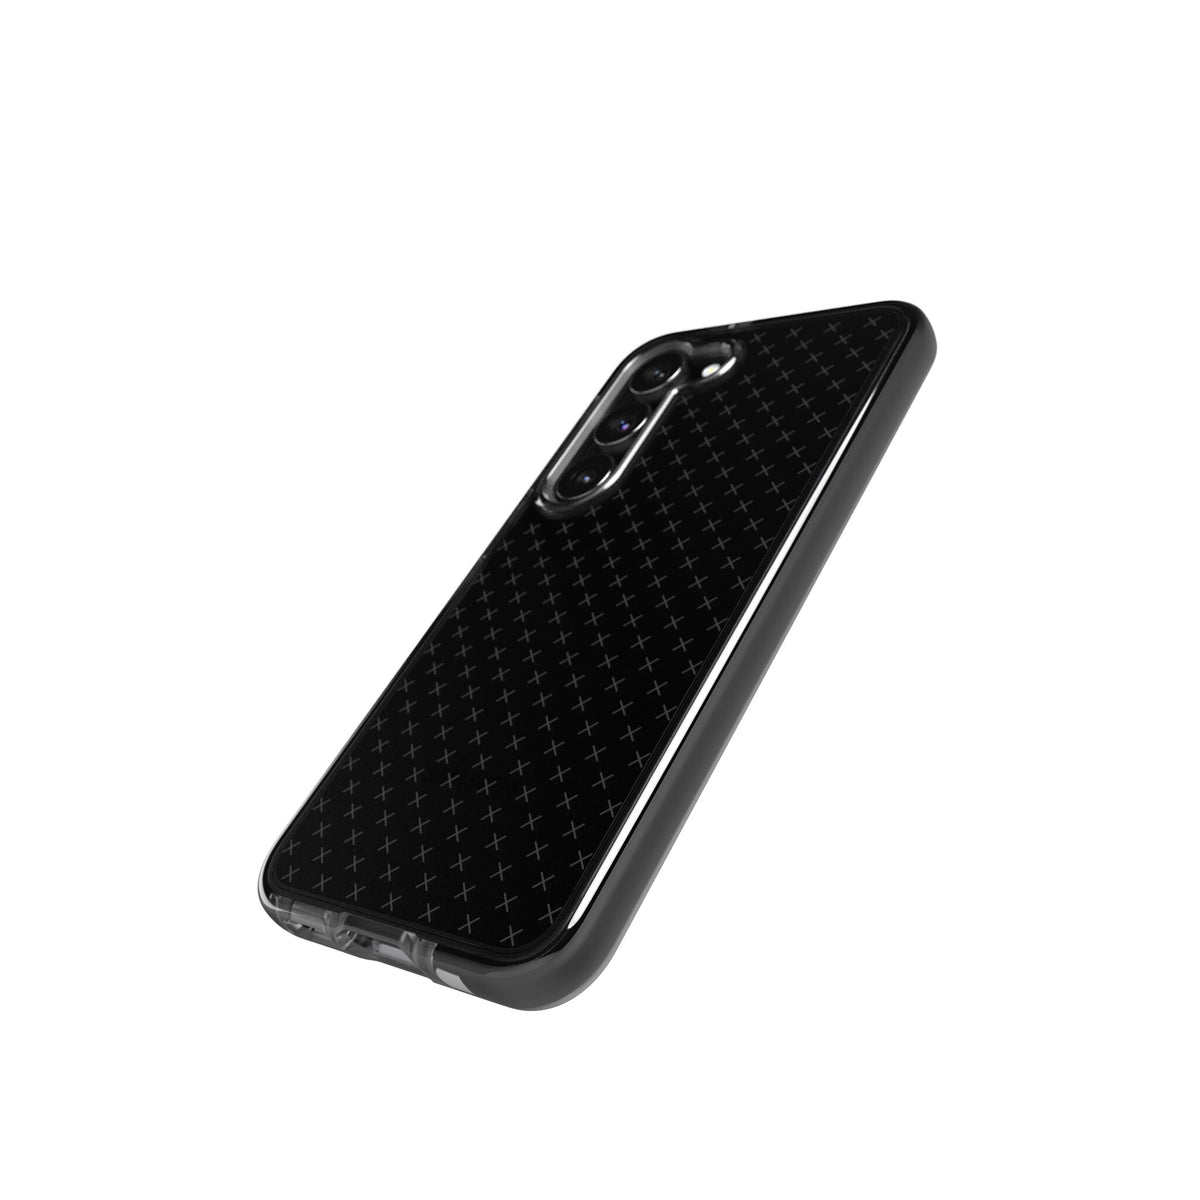 Tech21 Evo Check for Galaxy S23 in Smokey Black